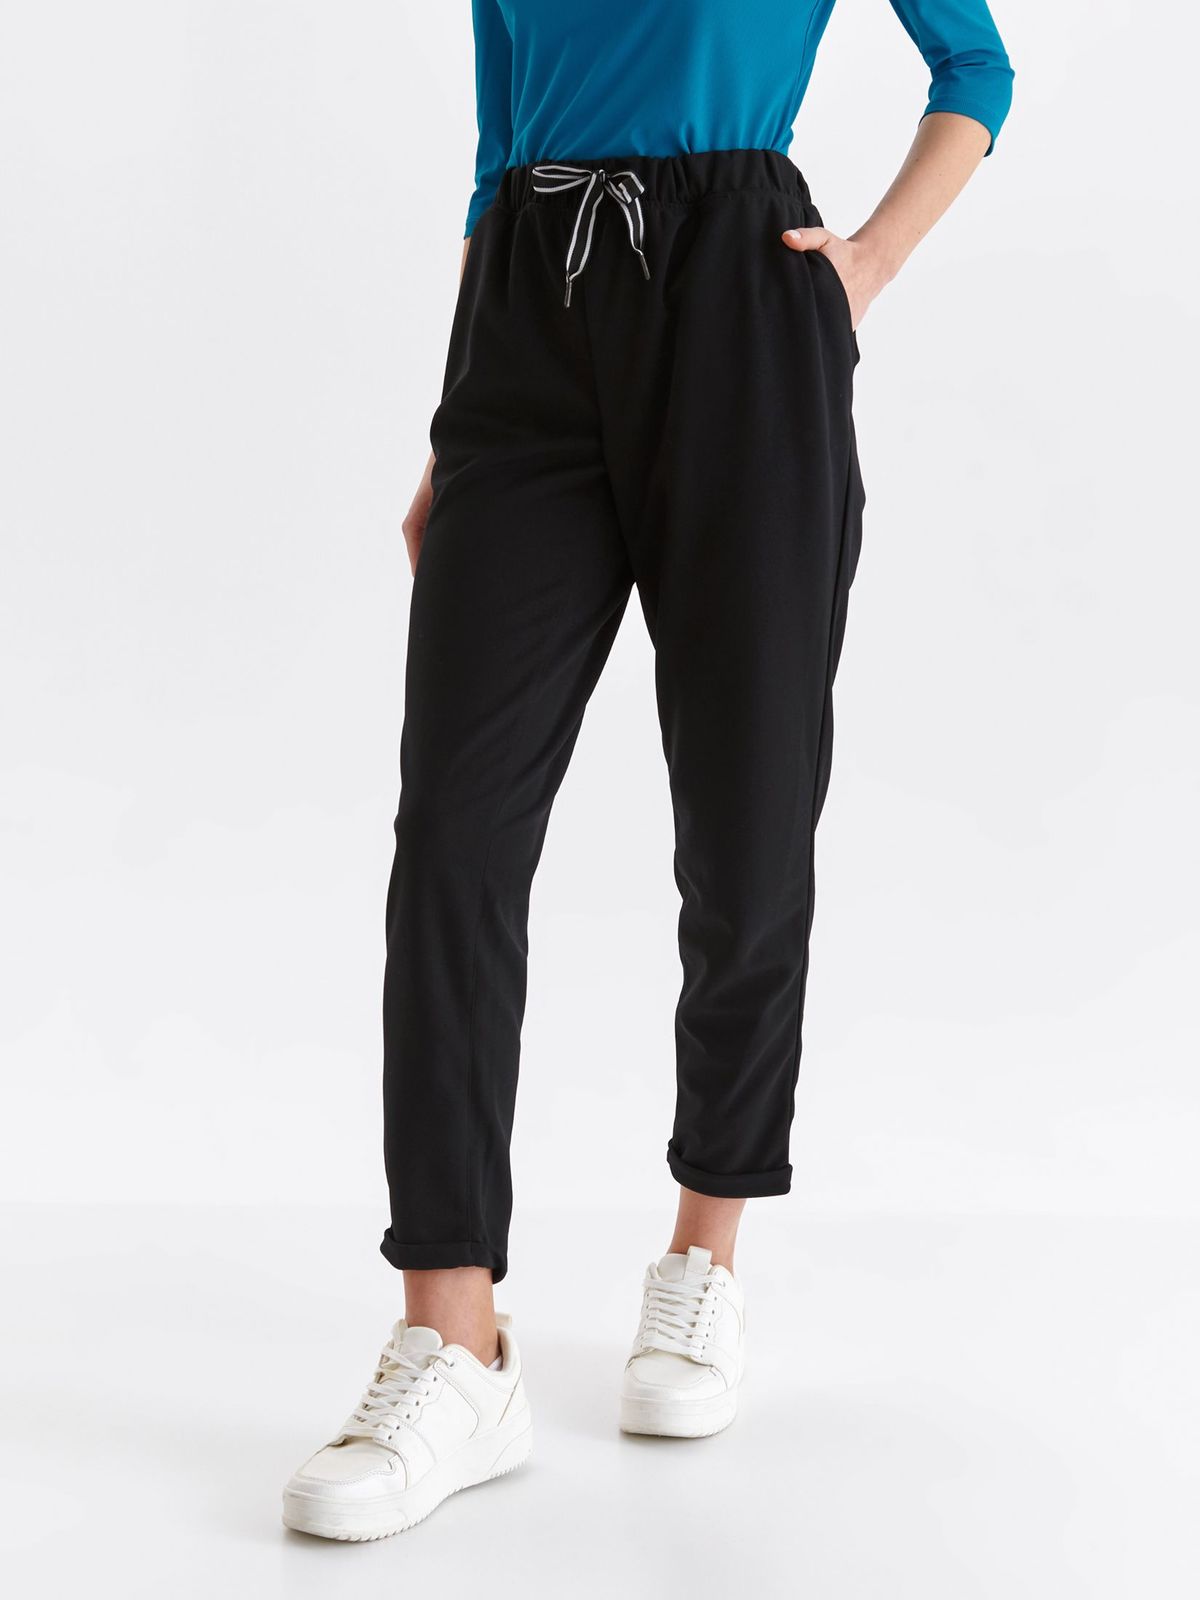 Pantaloni din material elastic negri lungi conici cu talie inalta si buzunare laterale - Top Secret